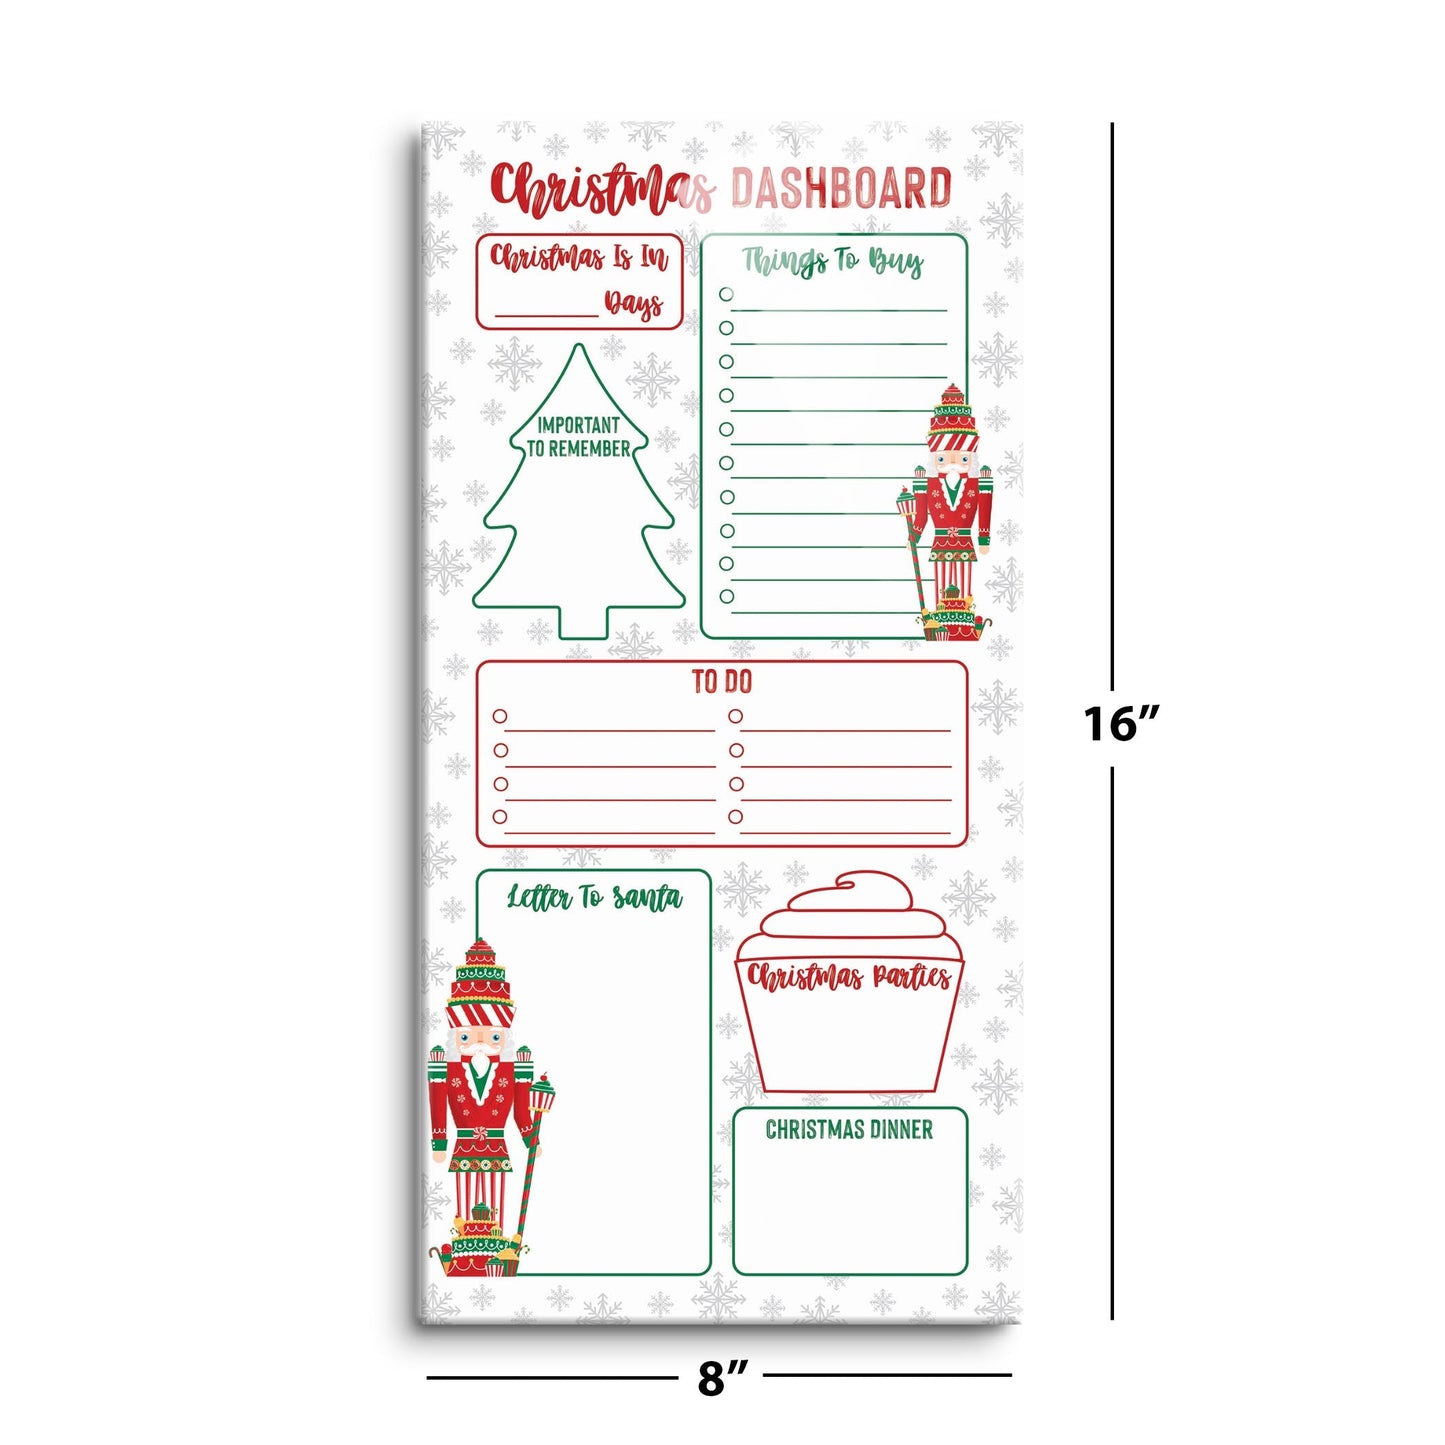 Classic Candyland Nutcracker Christmas Dashboard | 8x16